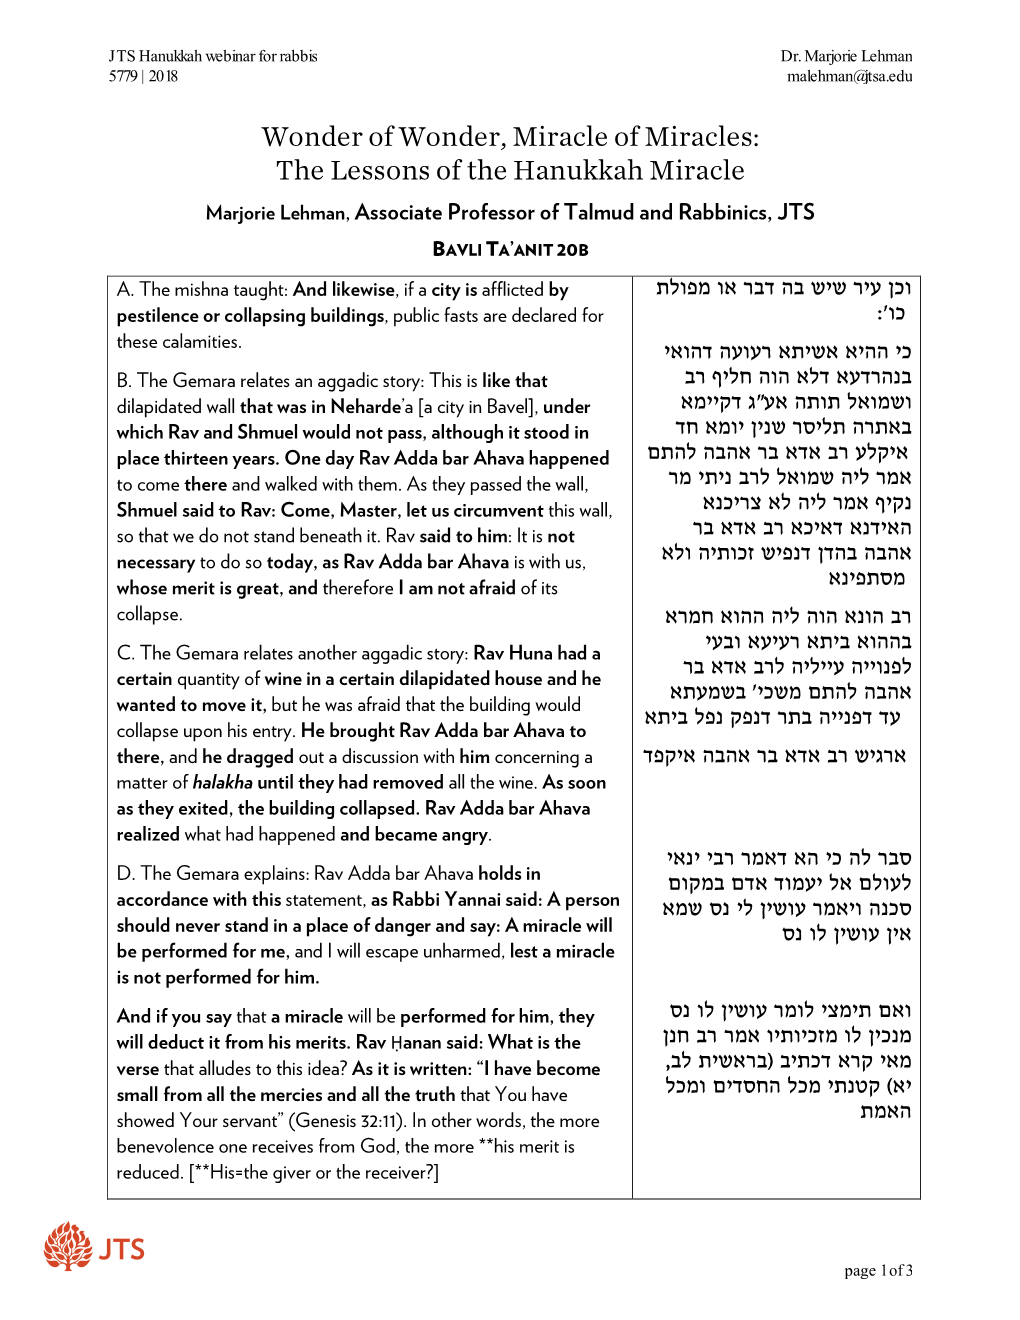 Wonder of Wonder, Miracle of Miracles: the Lessons of the Hanukkah Miracle Marjorie Lehman, Associate Professor of Talmud and Rabbinics, JTS